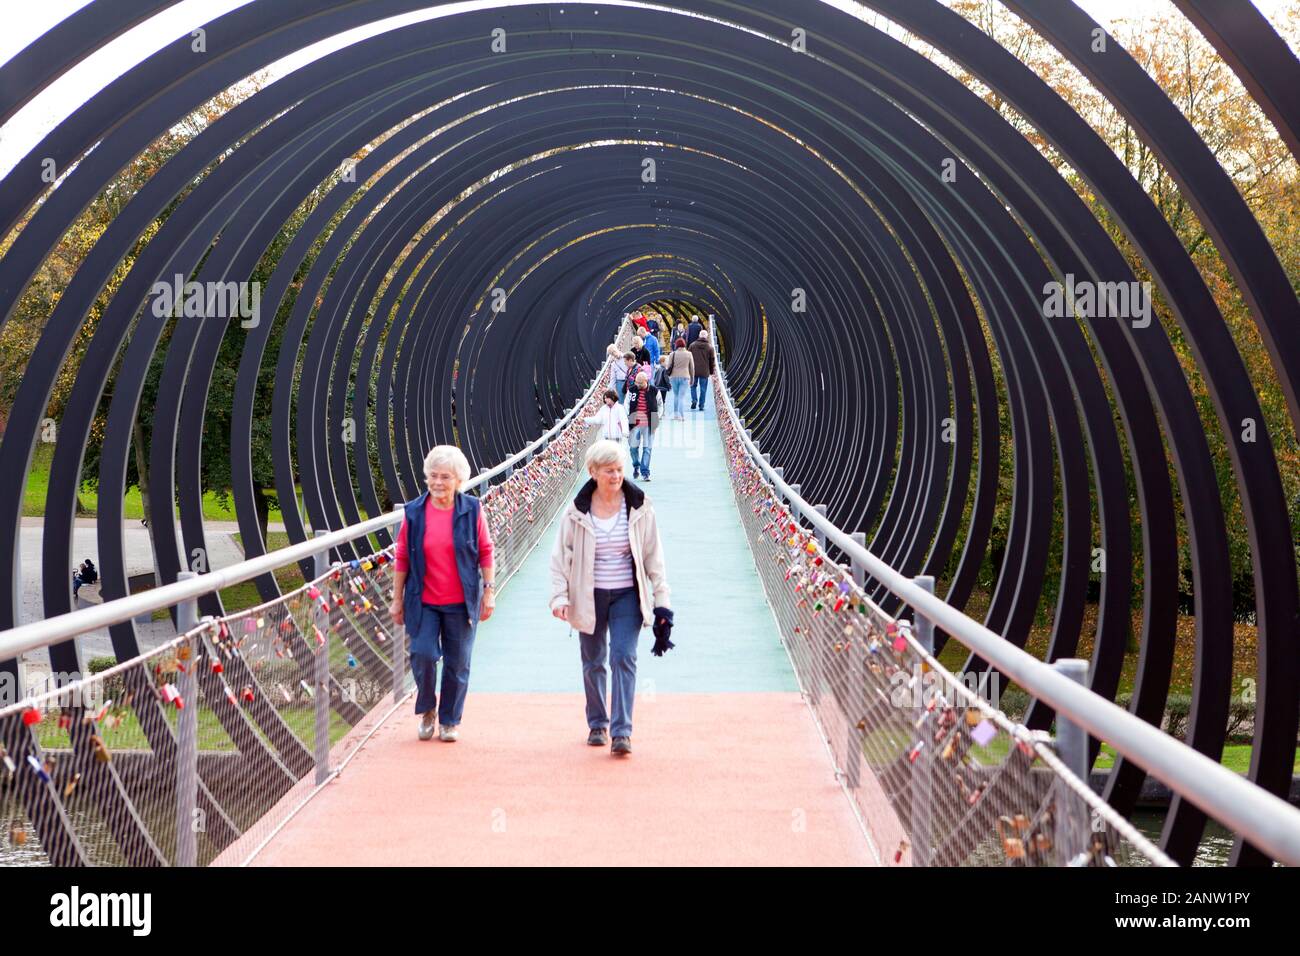 Slinky Springs to Fame, pedestrian bridge by Tobias Rehberger, Rhine-Herne Canal, Oberhausen,  Germany Stock Photo